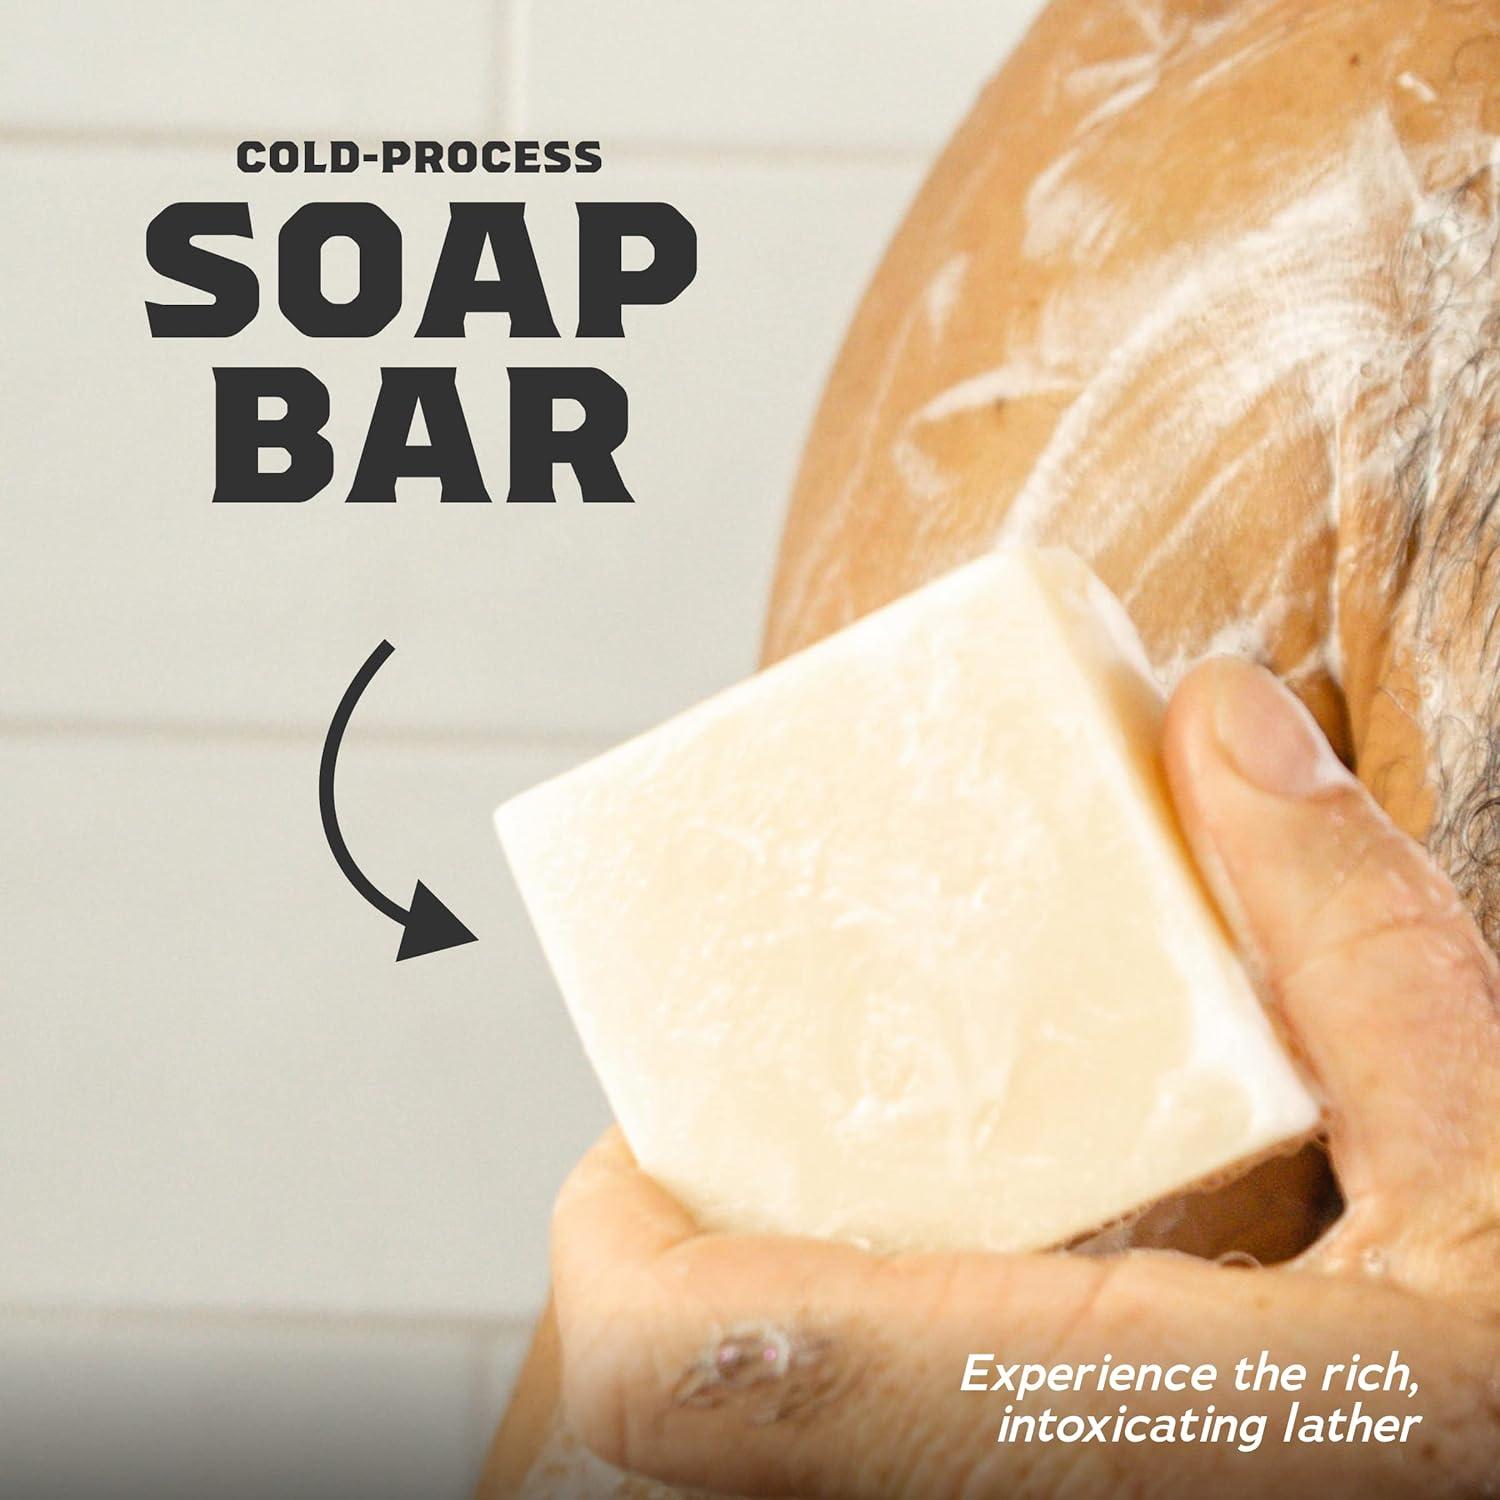 Dr. Squatch Bar Soap (Summer Citrus)